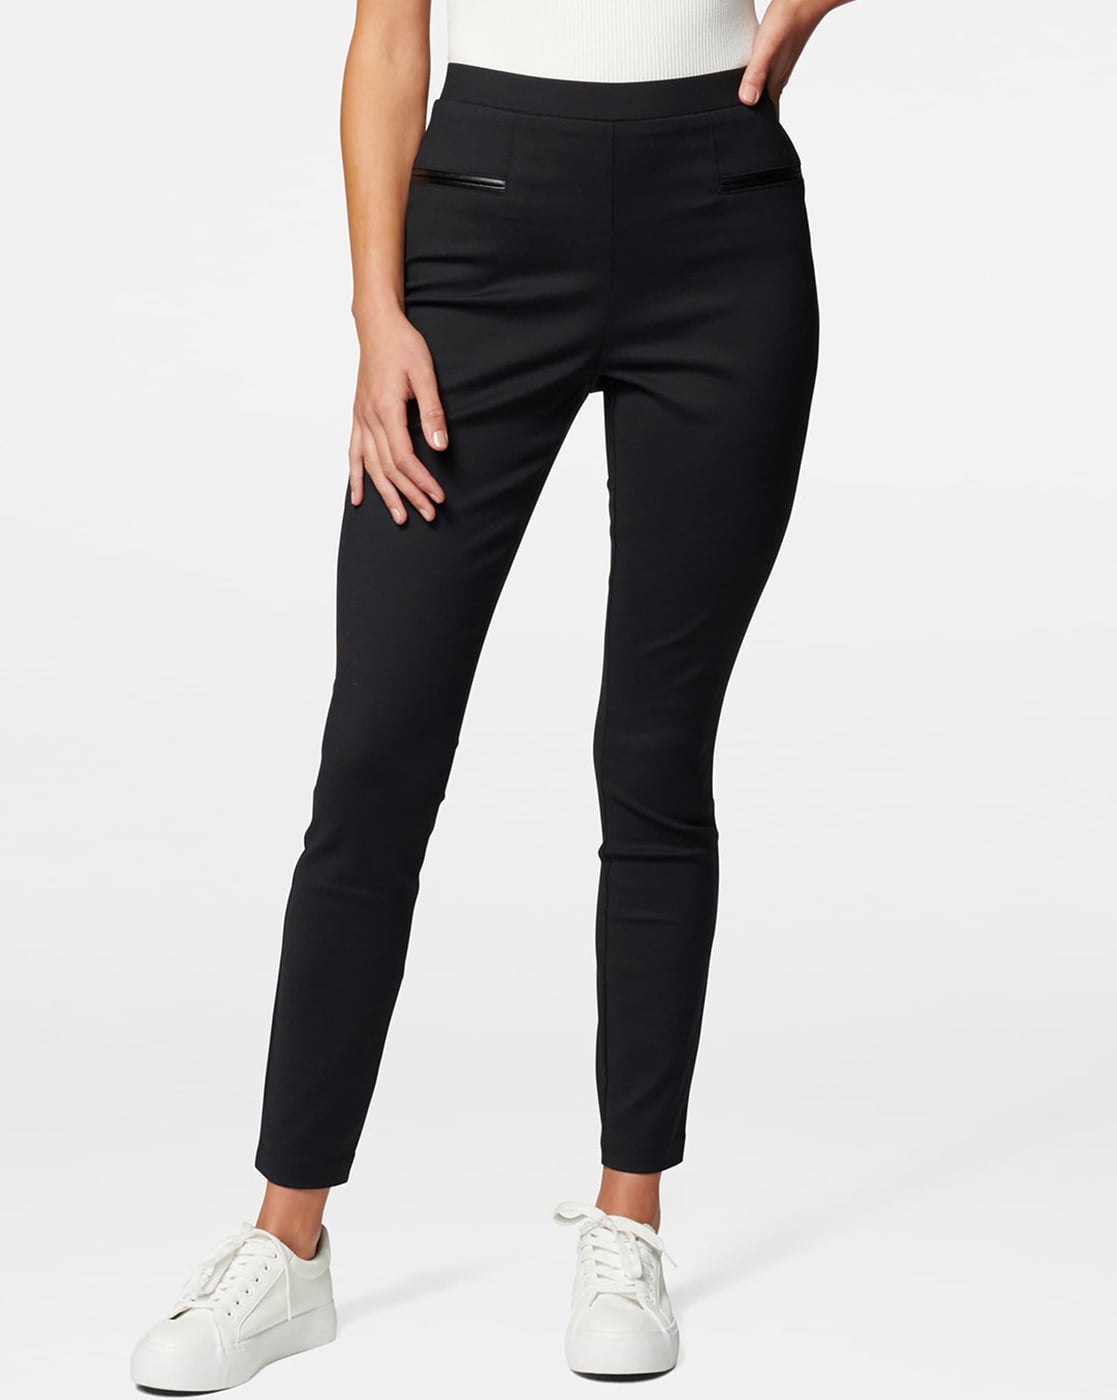 Buy Black Trousers  Pants for Women by Uniquest Online  Ajiocom